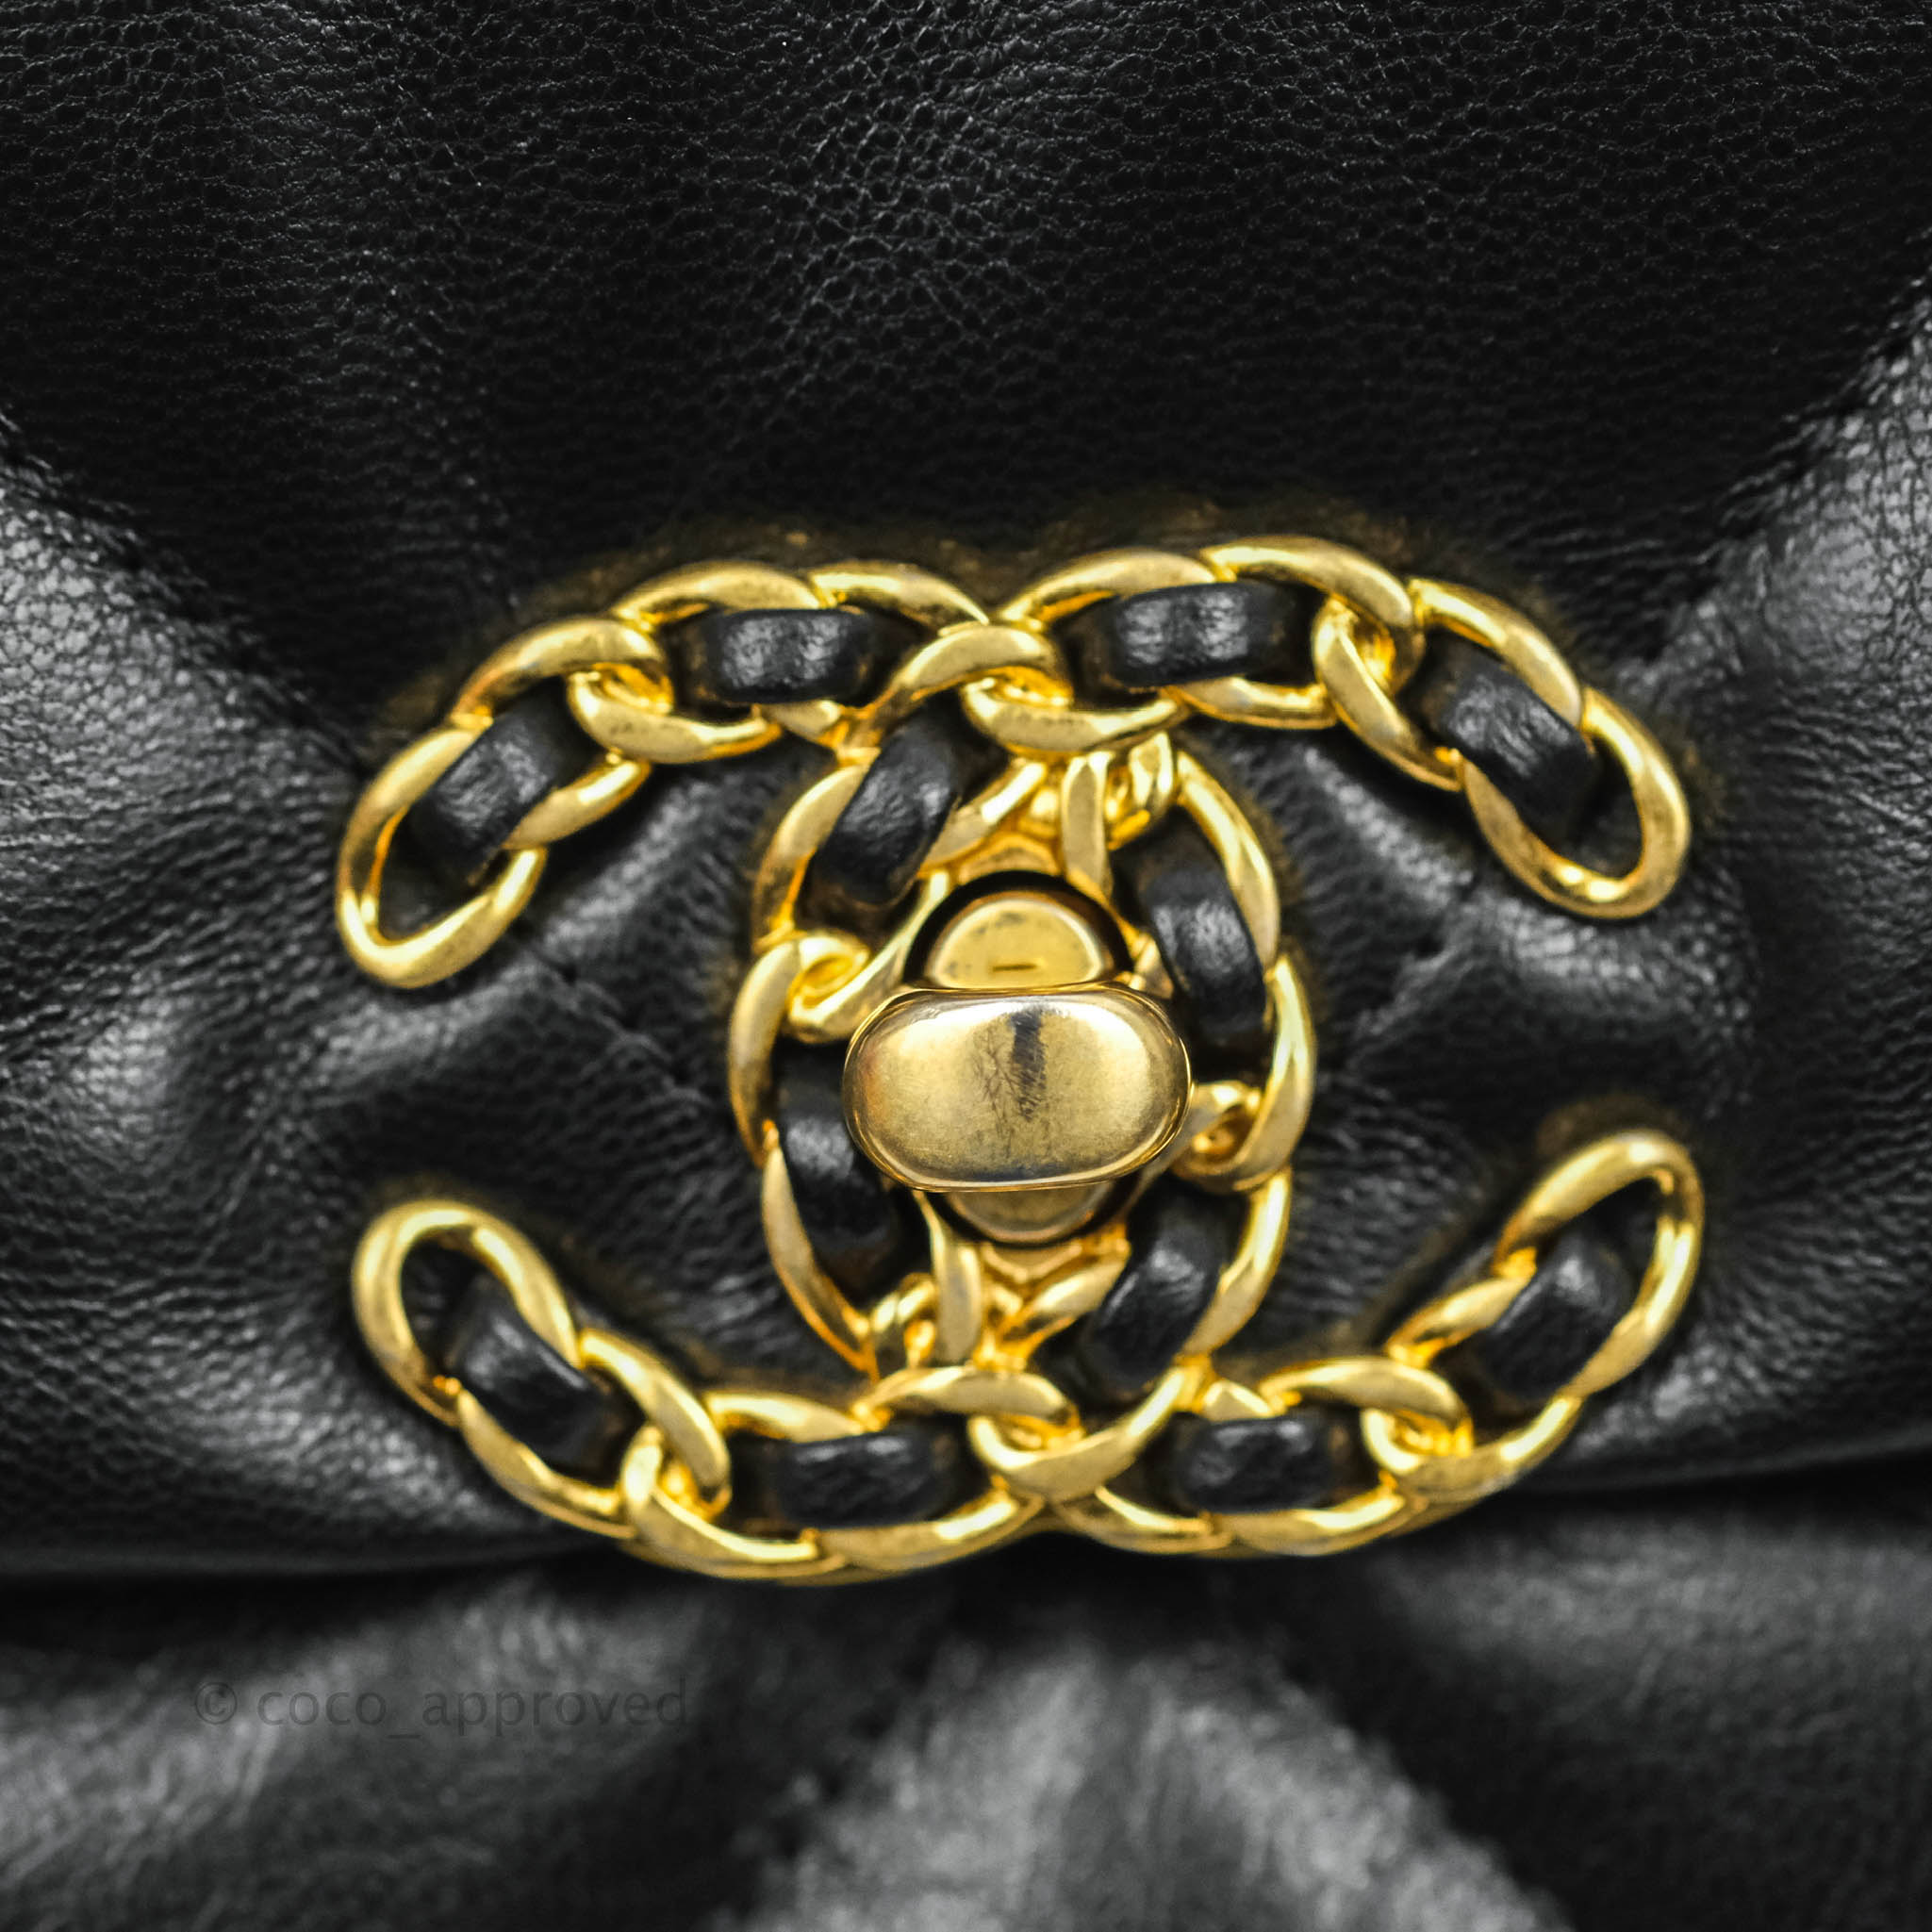 Chanel 19 Small Flap Bag C1160-black